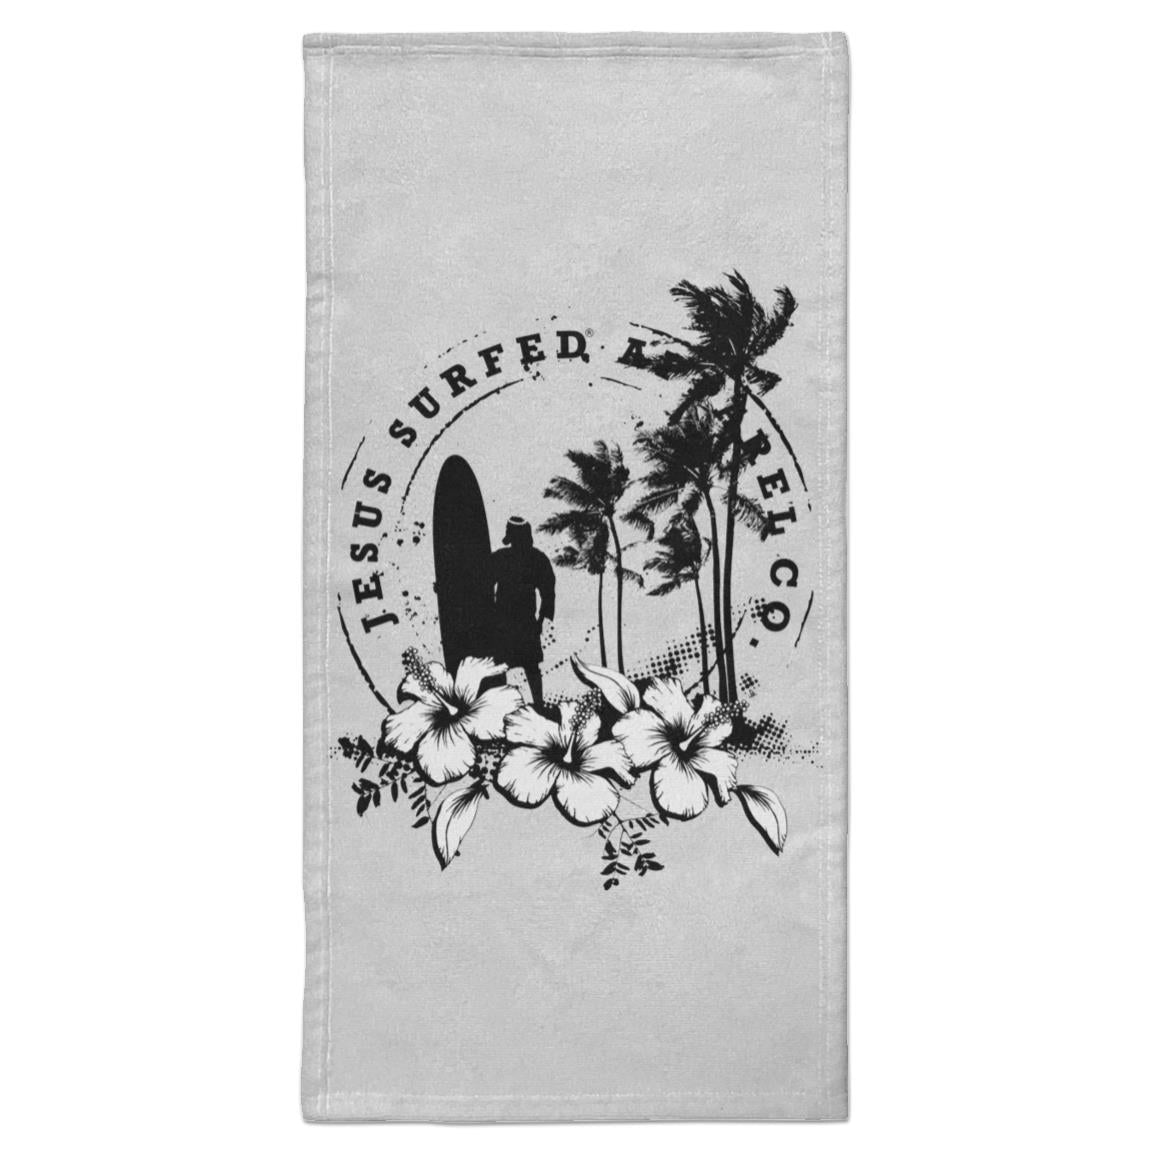 Jesus Surfed Apparel Towel - 15x30